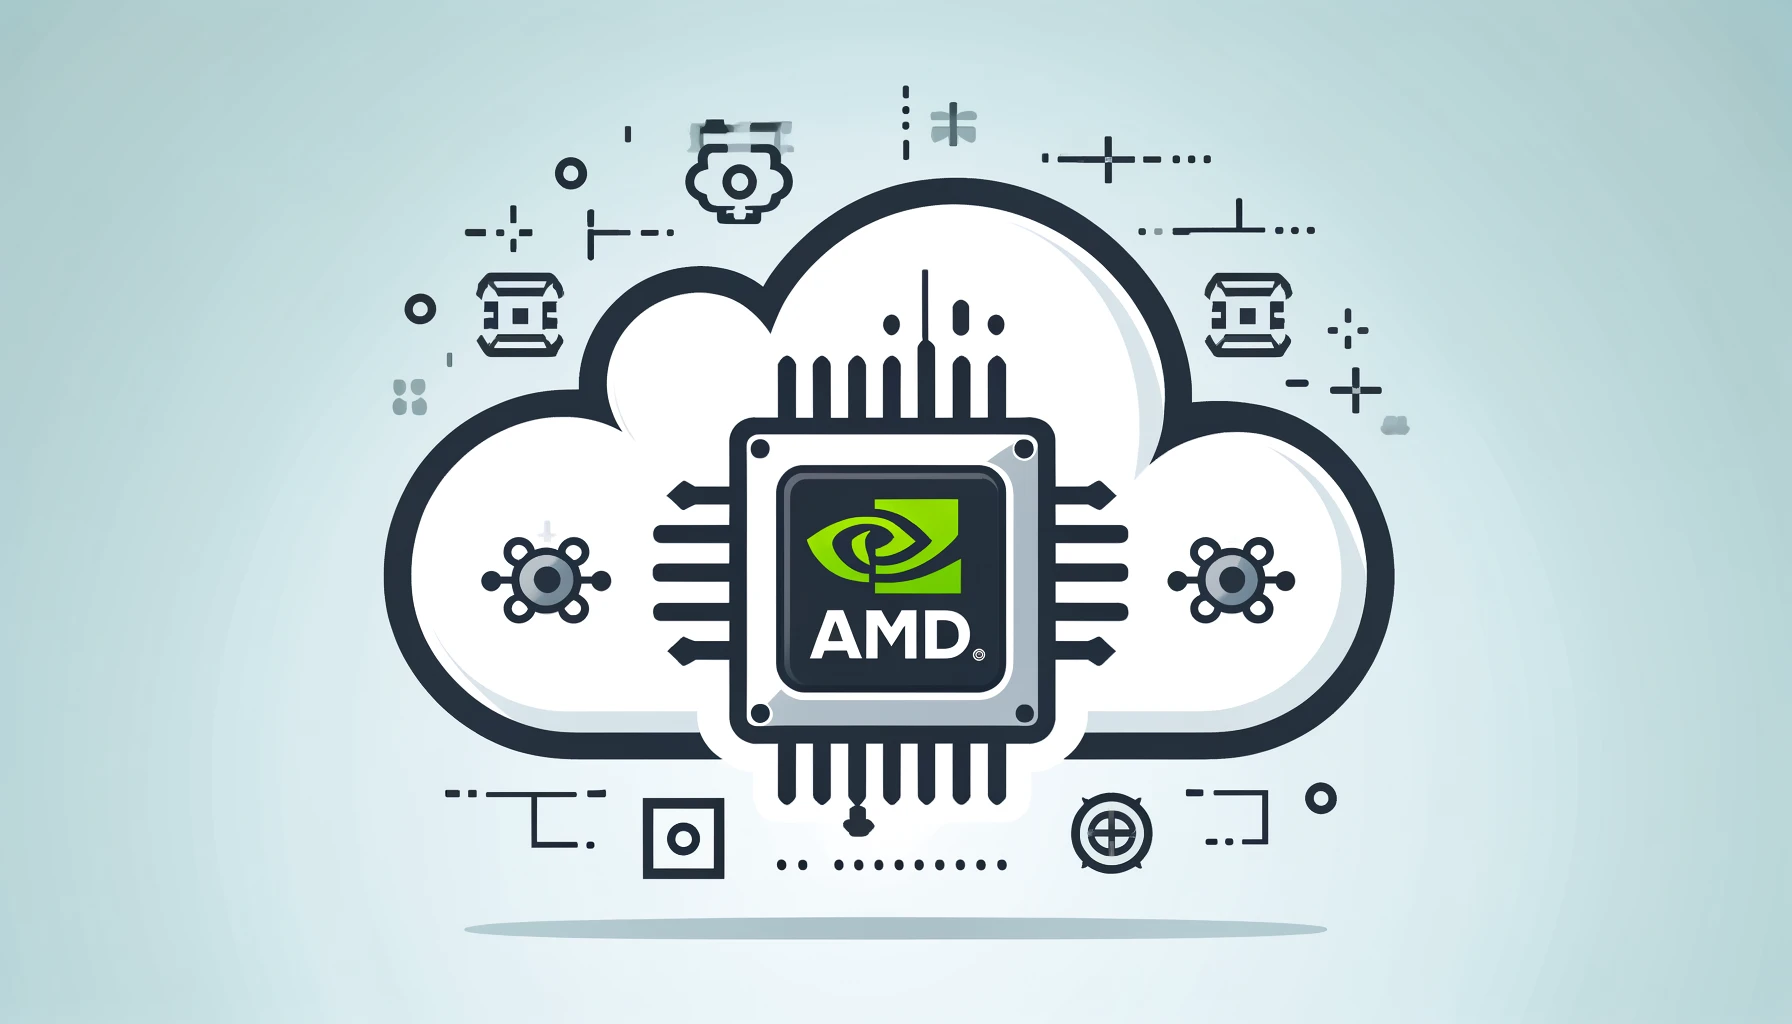 Microsoft provides cloud customers with an innovative AMD alternative to Nvidia AI processors